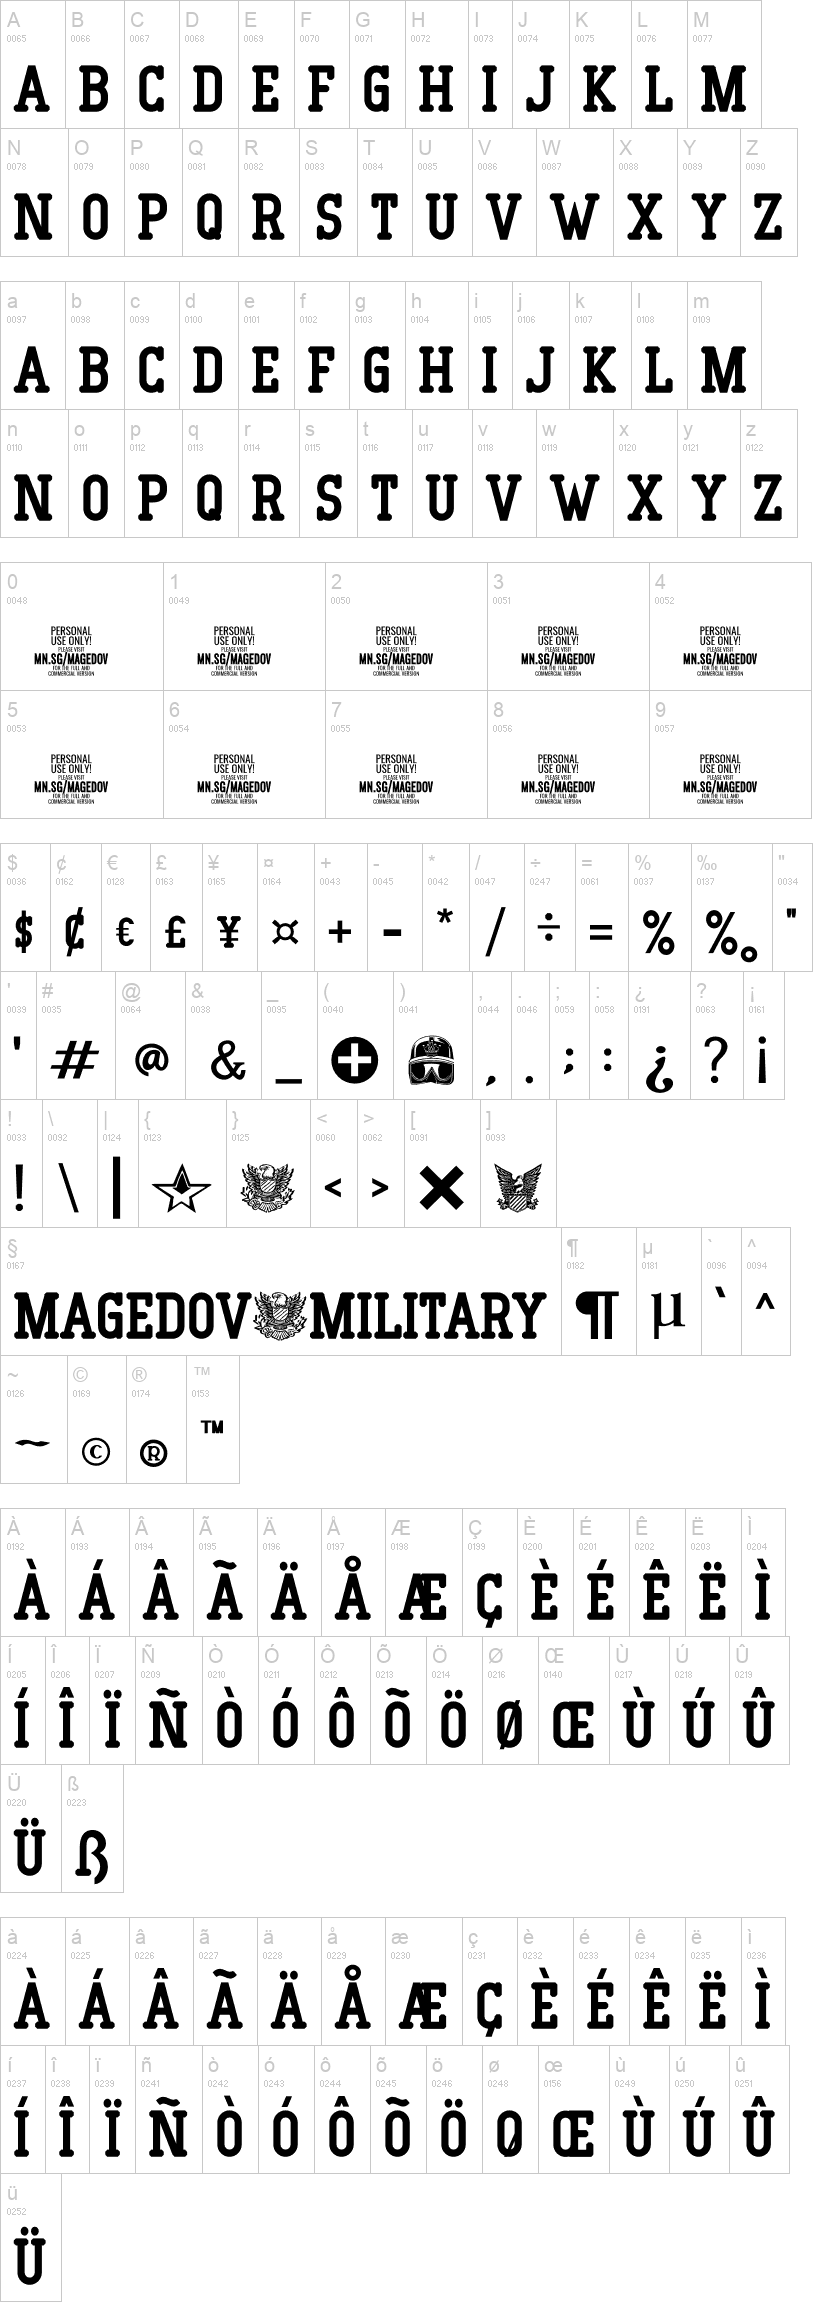 Magedov Military